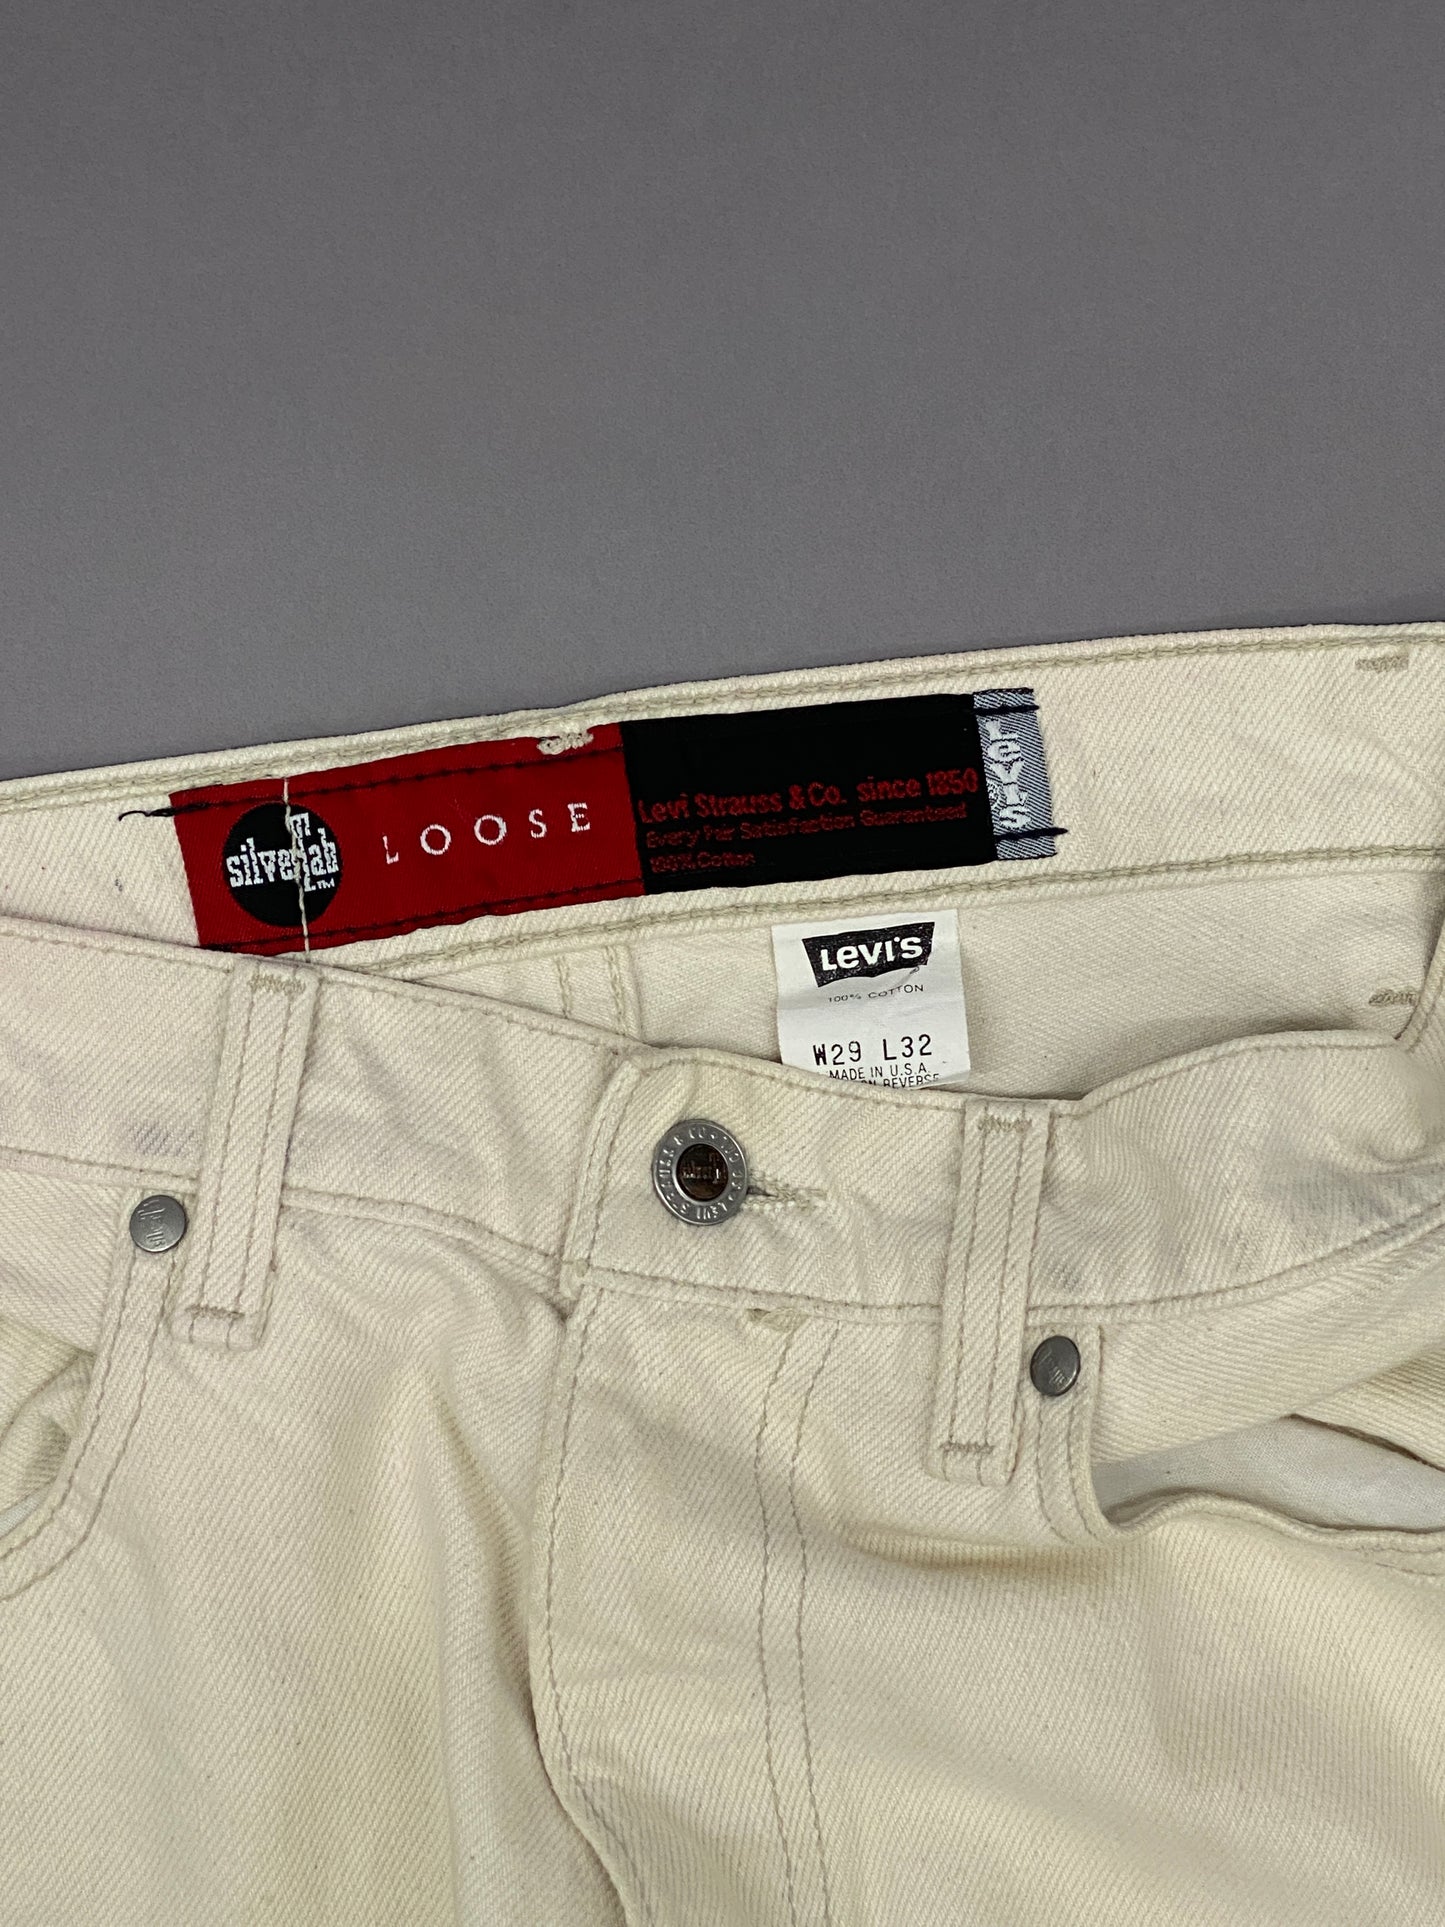 Levis Silvertab Vintage White Jeans - 29 x 32